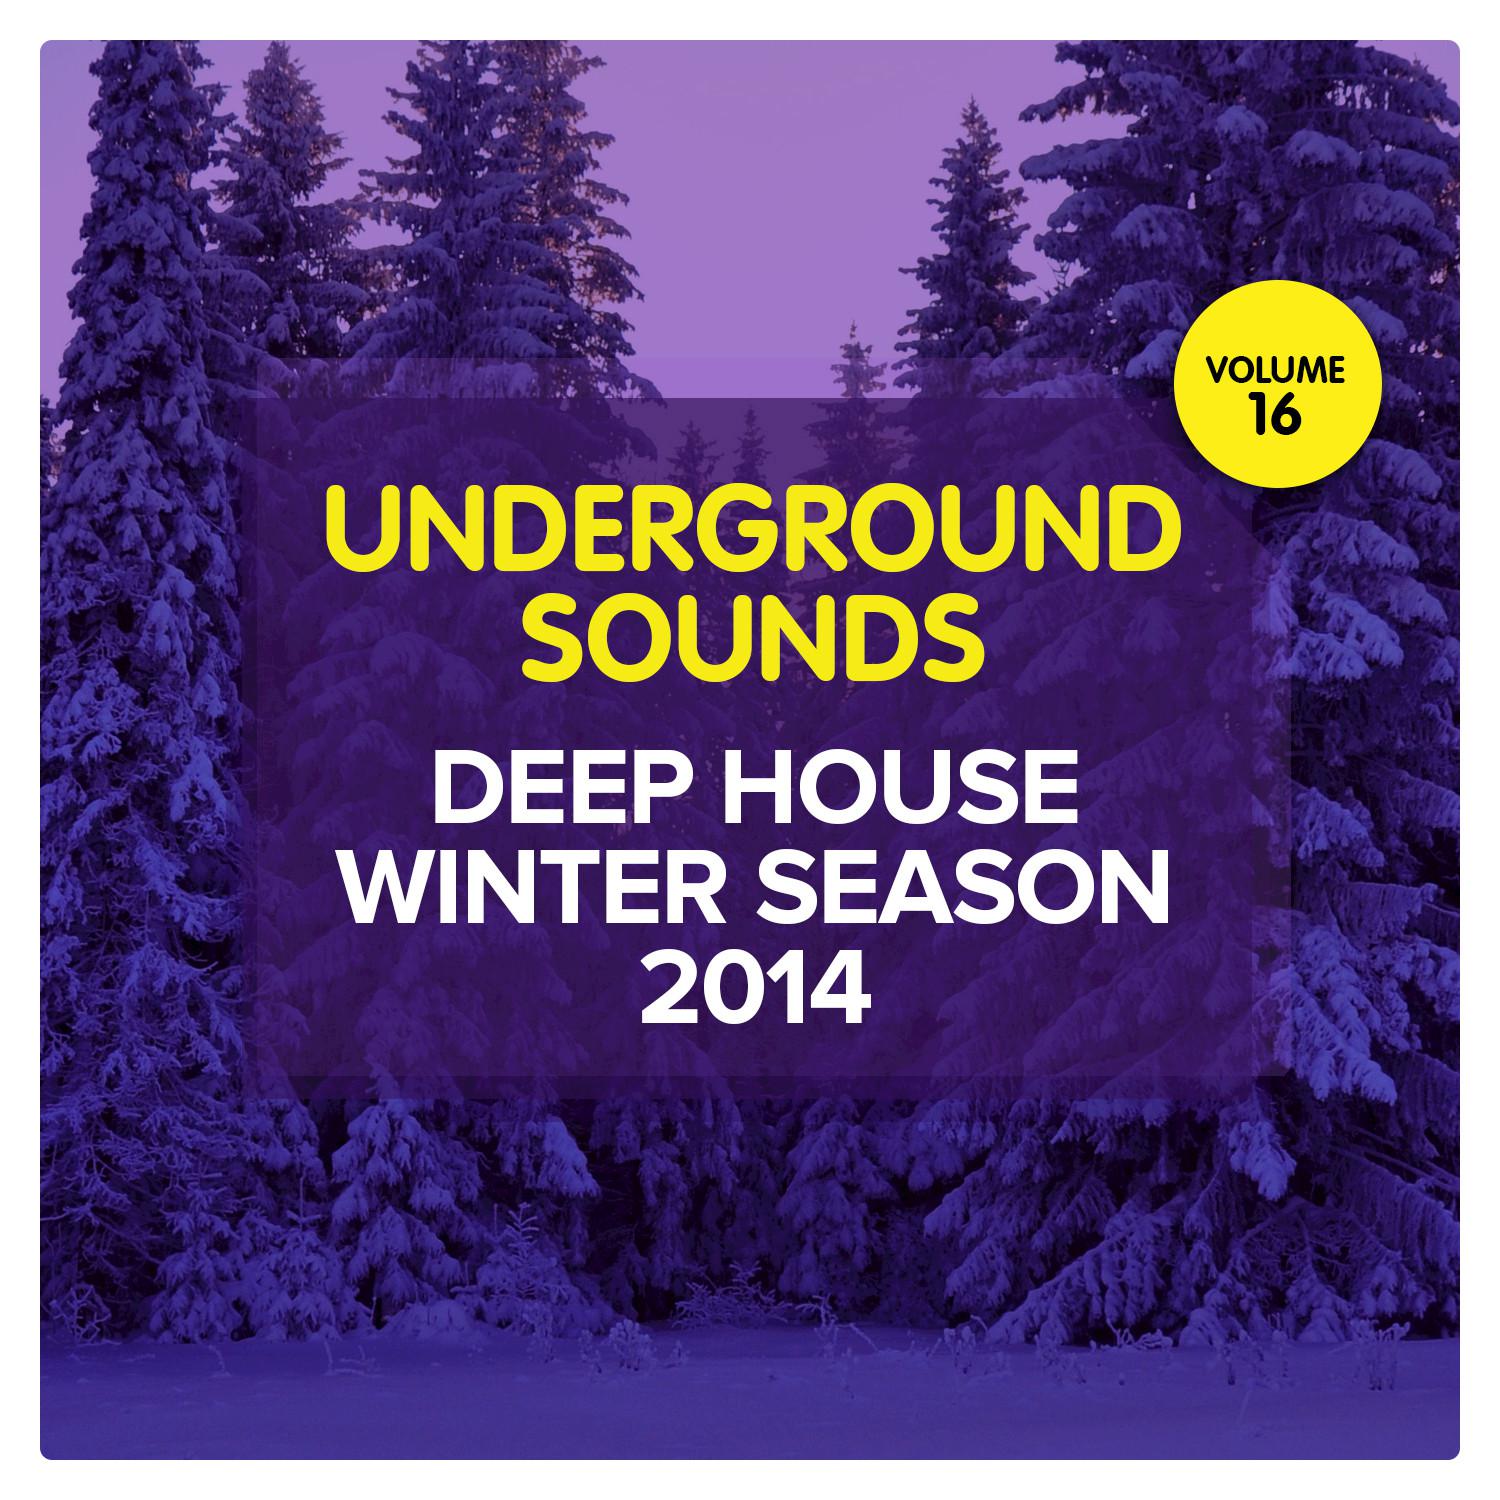 Deep House Winter Season 2014 - Underground Sounds, Vol. 16